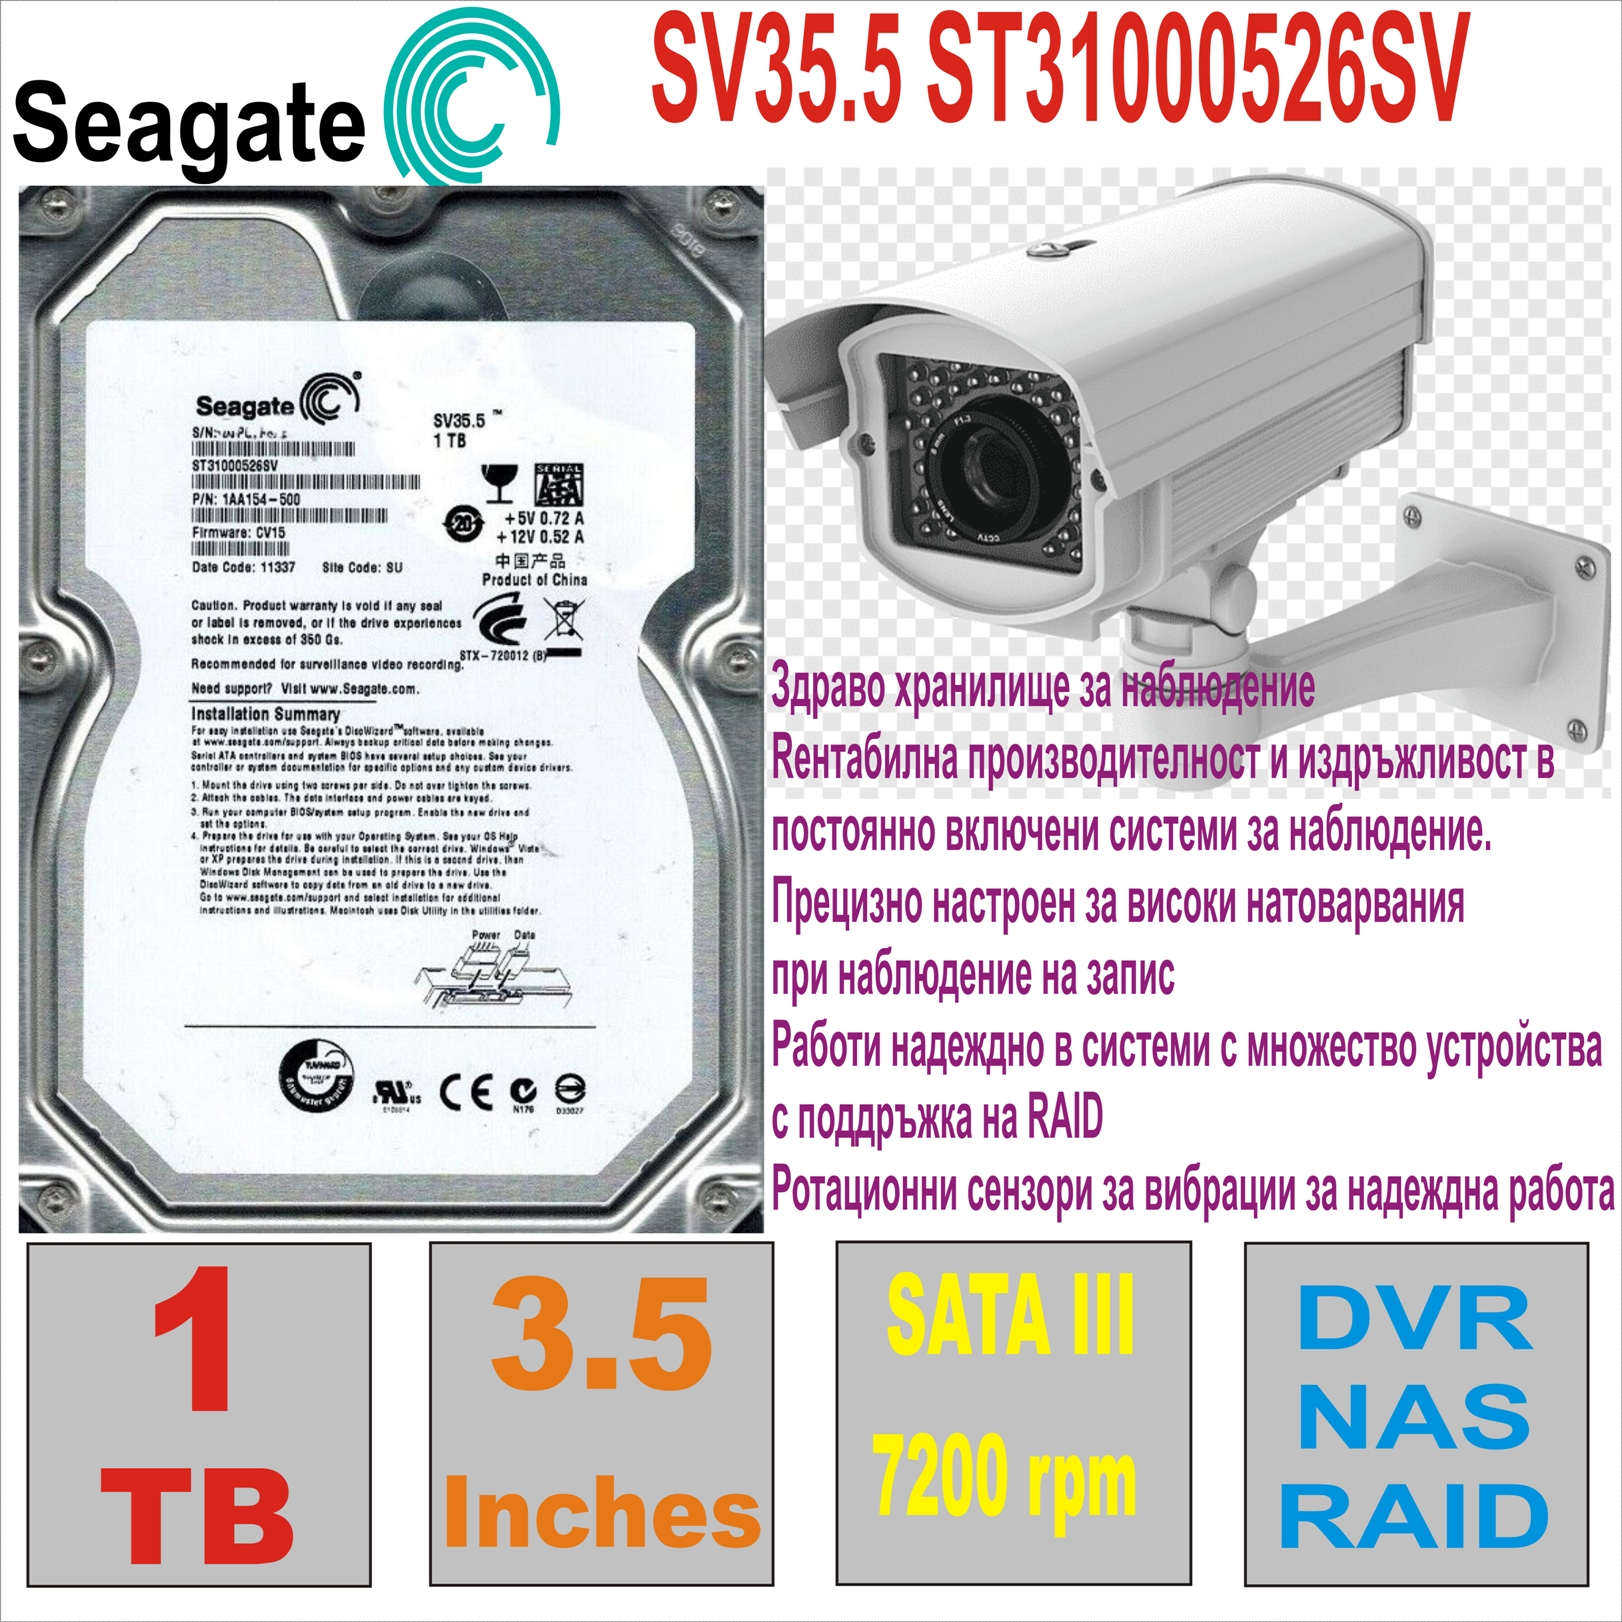 HDD 3.5` 1 TB SEAGATE SV35 ST31000526SV